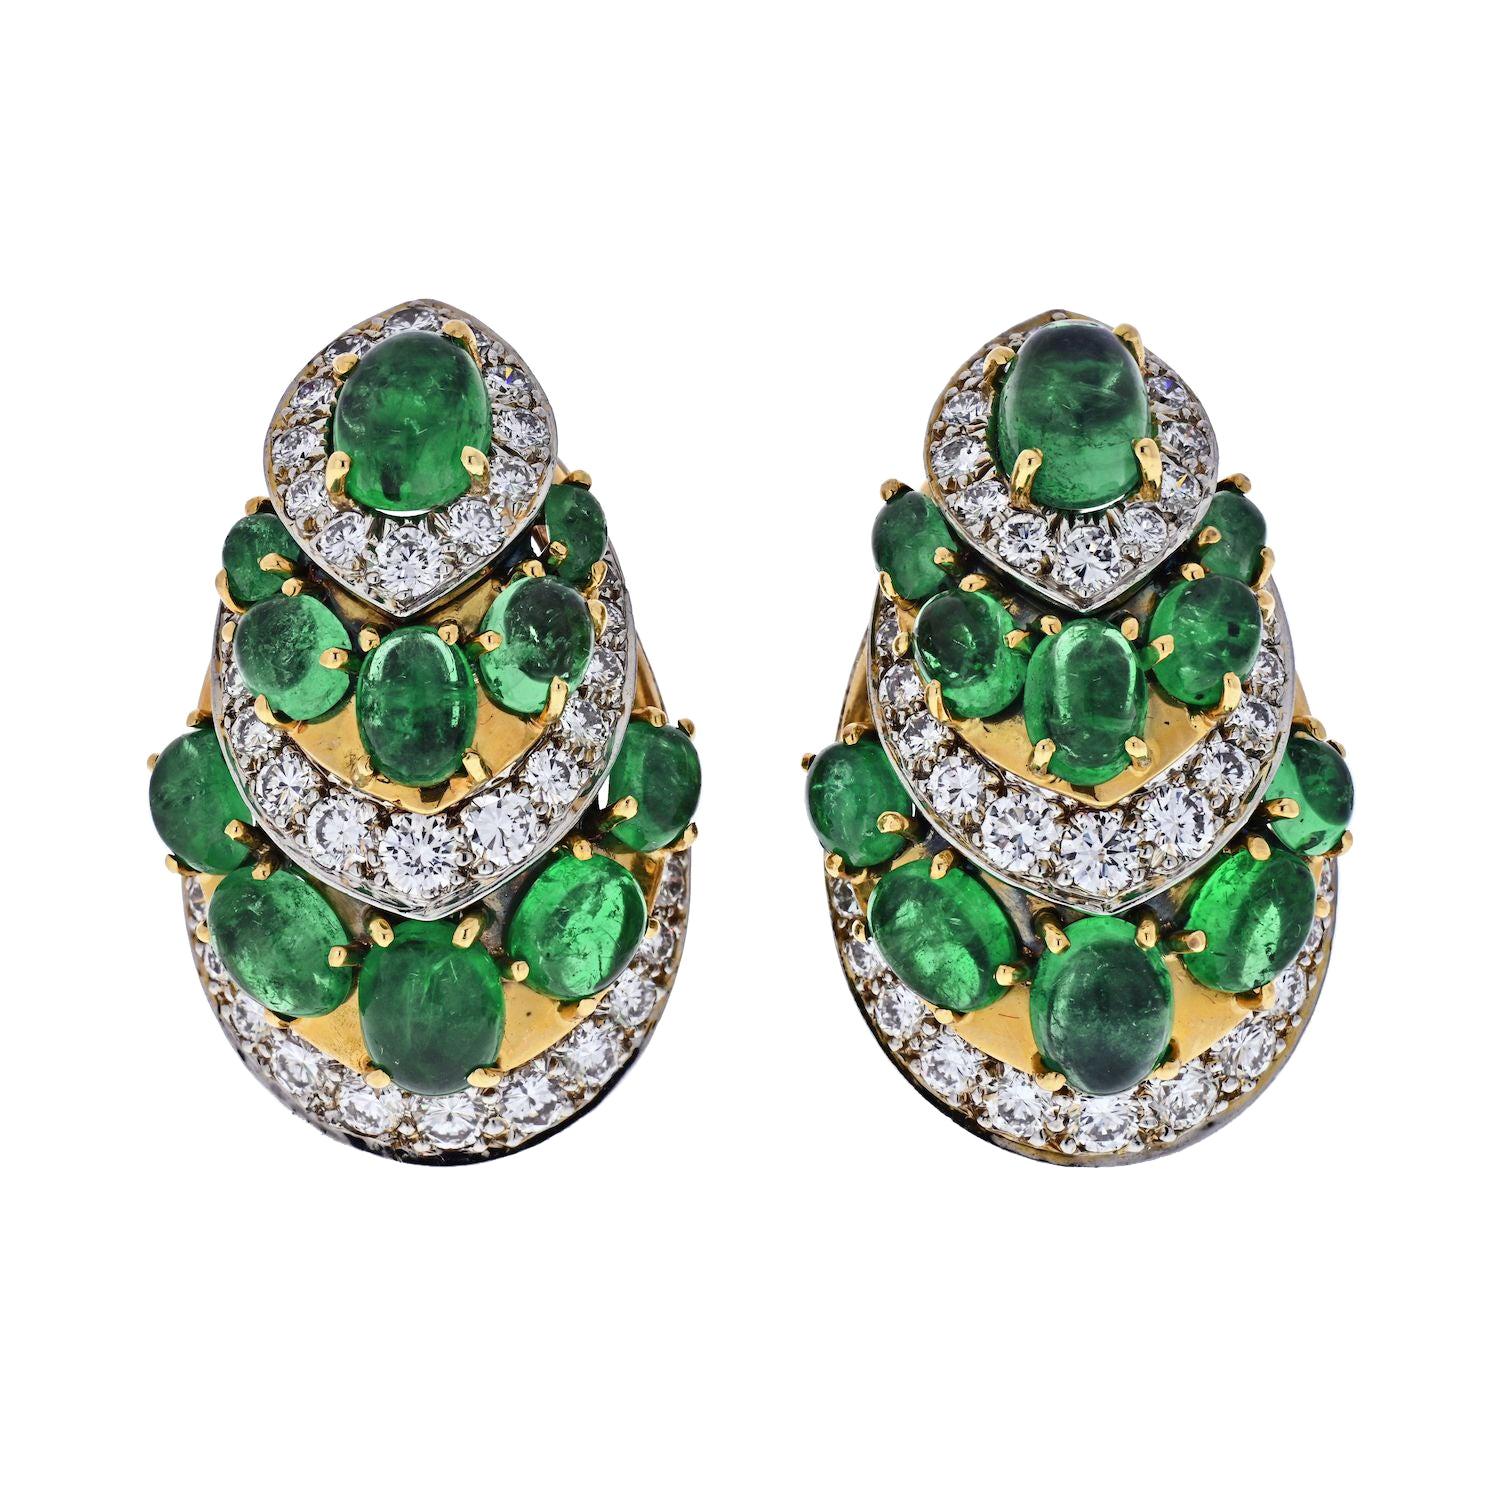 David Webb Platinum and 18 Karat Yellow Gold Diamond and Green Emerald Earrings